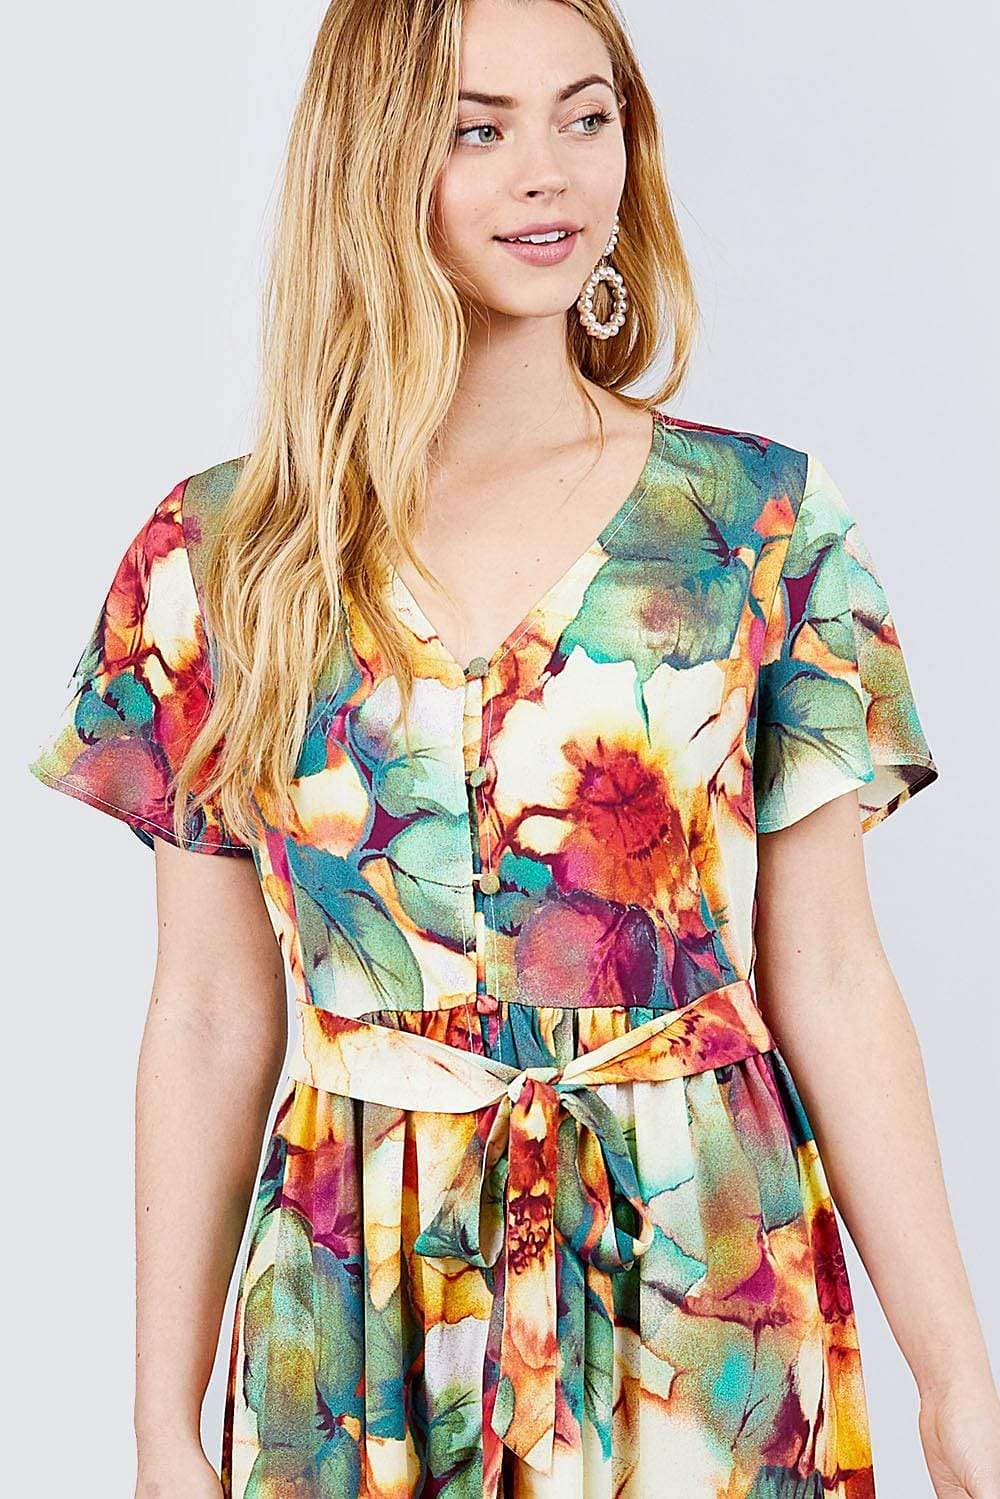 Short Sleeve V-Neck Floral Dress - Shopping Therapy, LLC dress